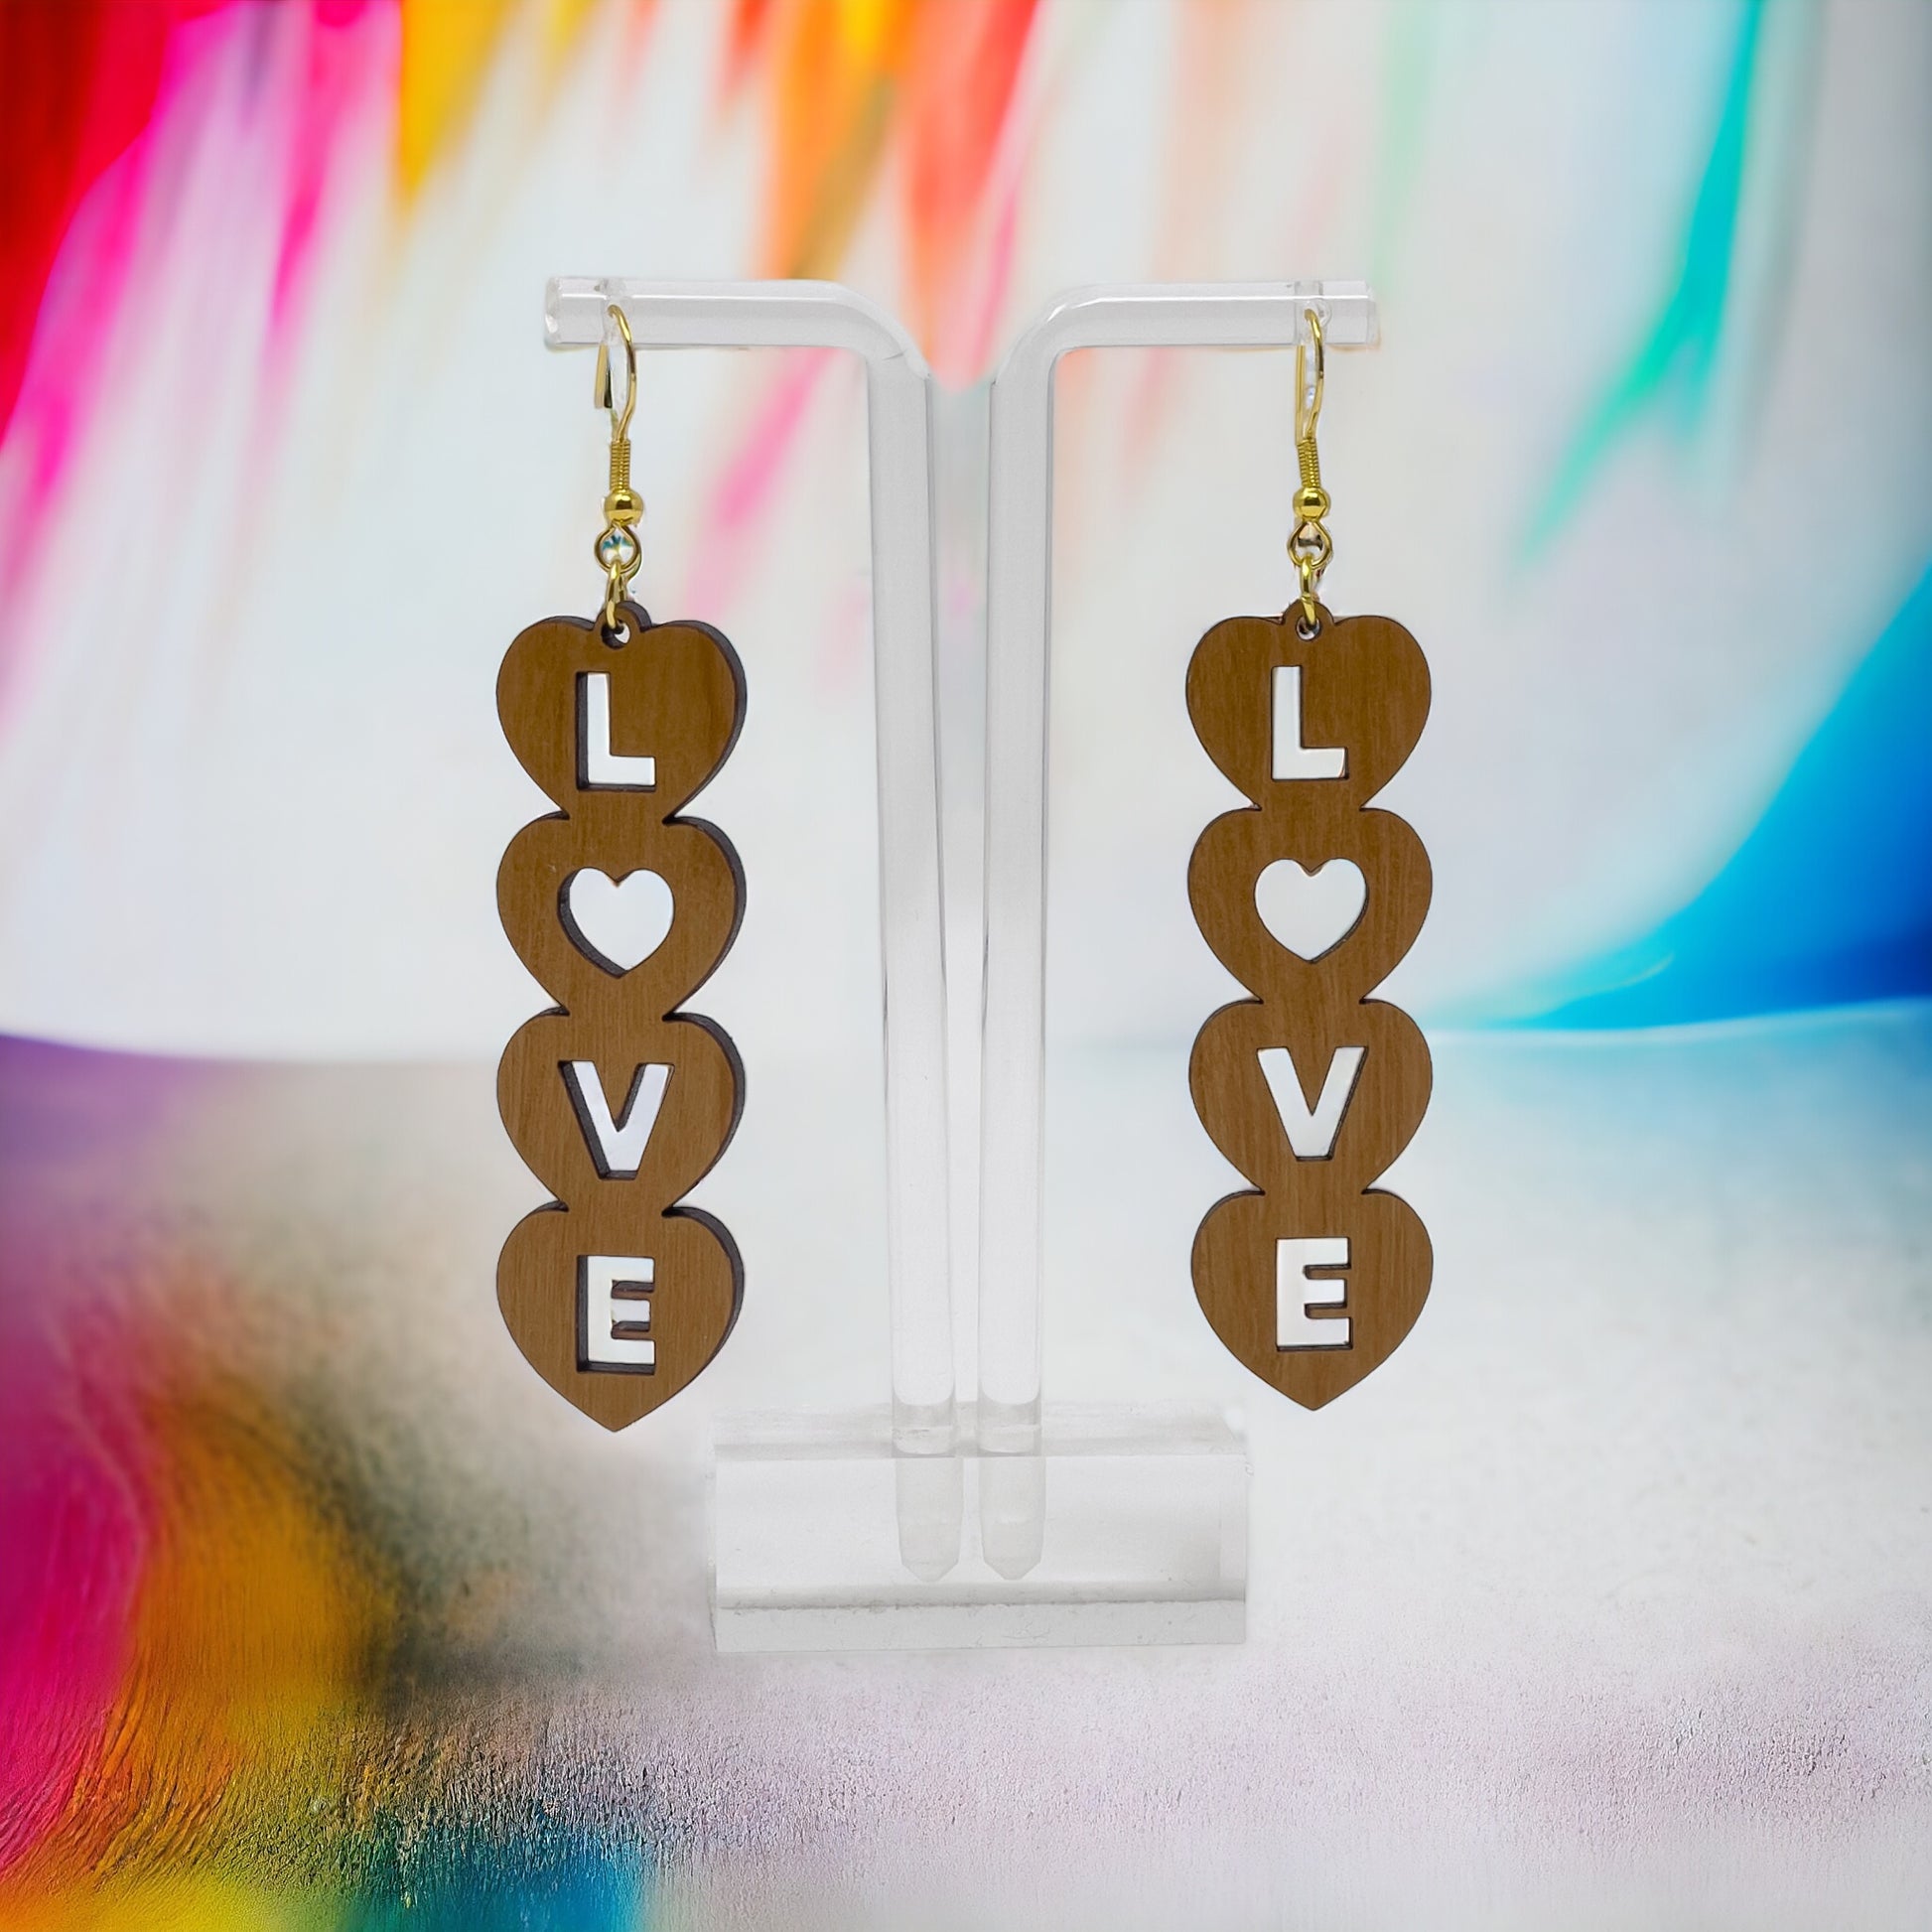 Heart Earrings with Cutout Letters that Spell Love - Rustic Valentine's Dangle Earrings